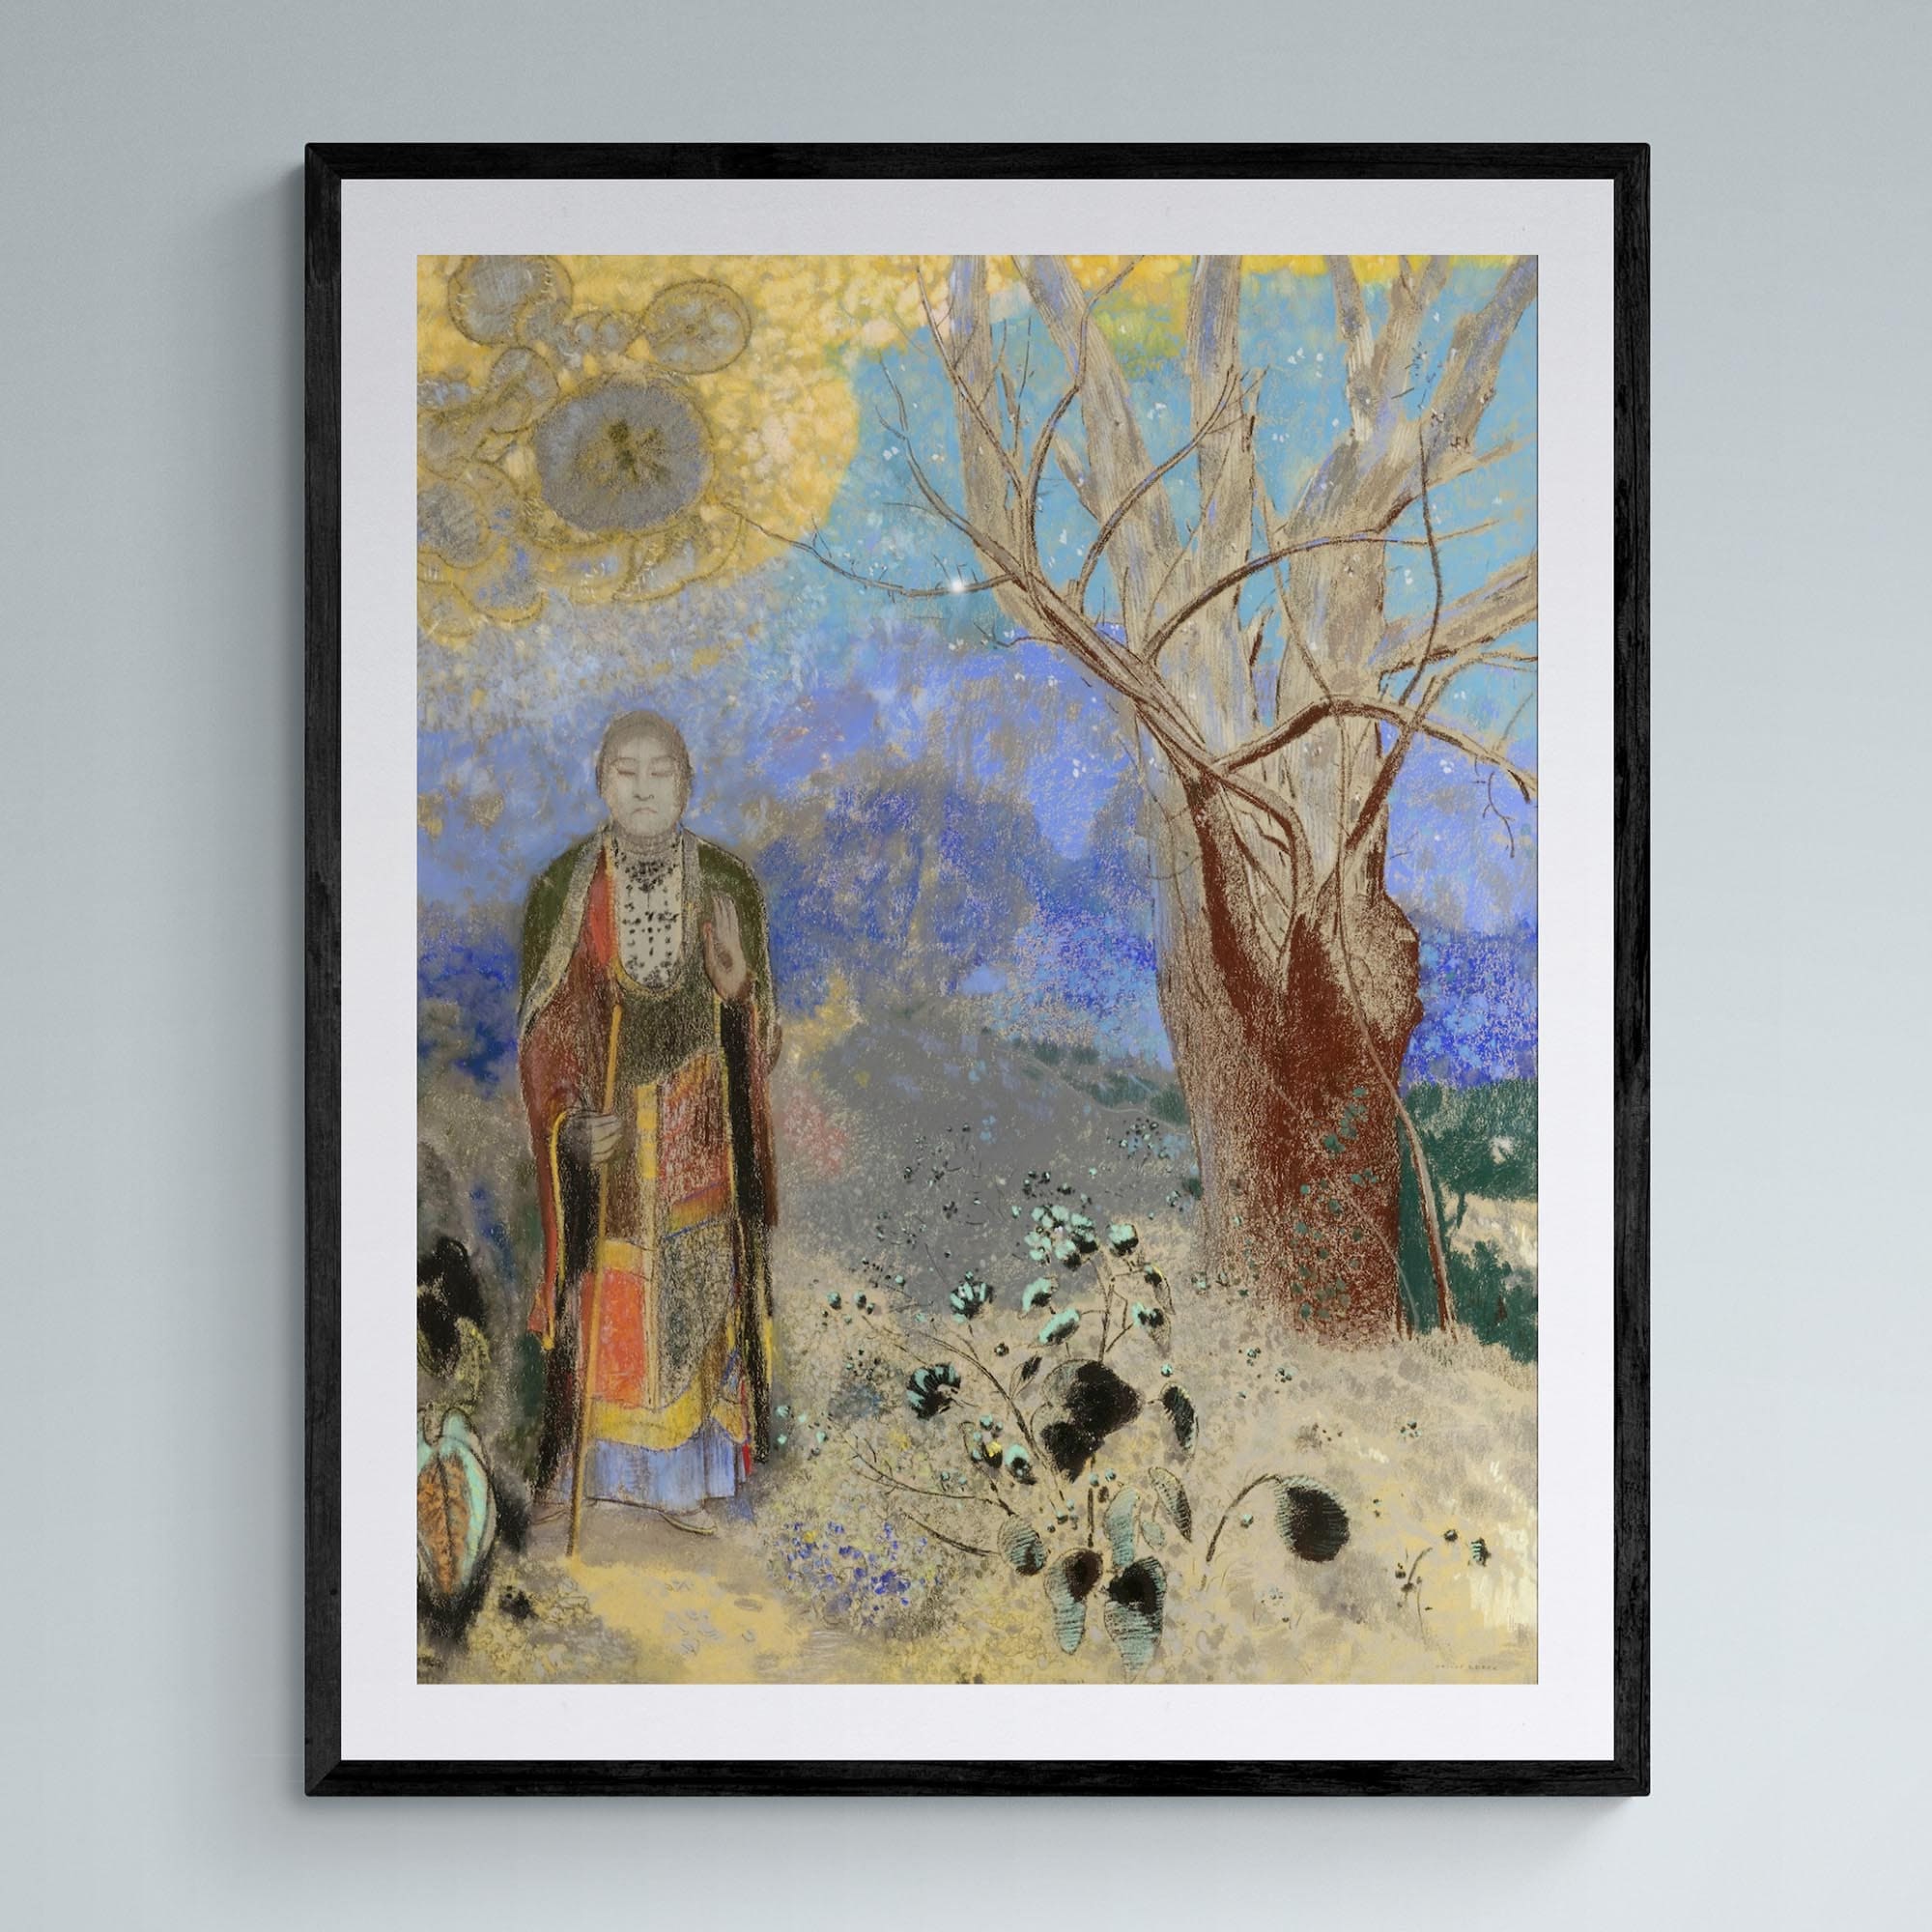 6"x8" The Buddha, by Odilon Redon, Symbolism Surrealist Gift Antique Buddhist Sacred Fine Art Print